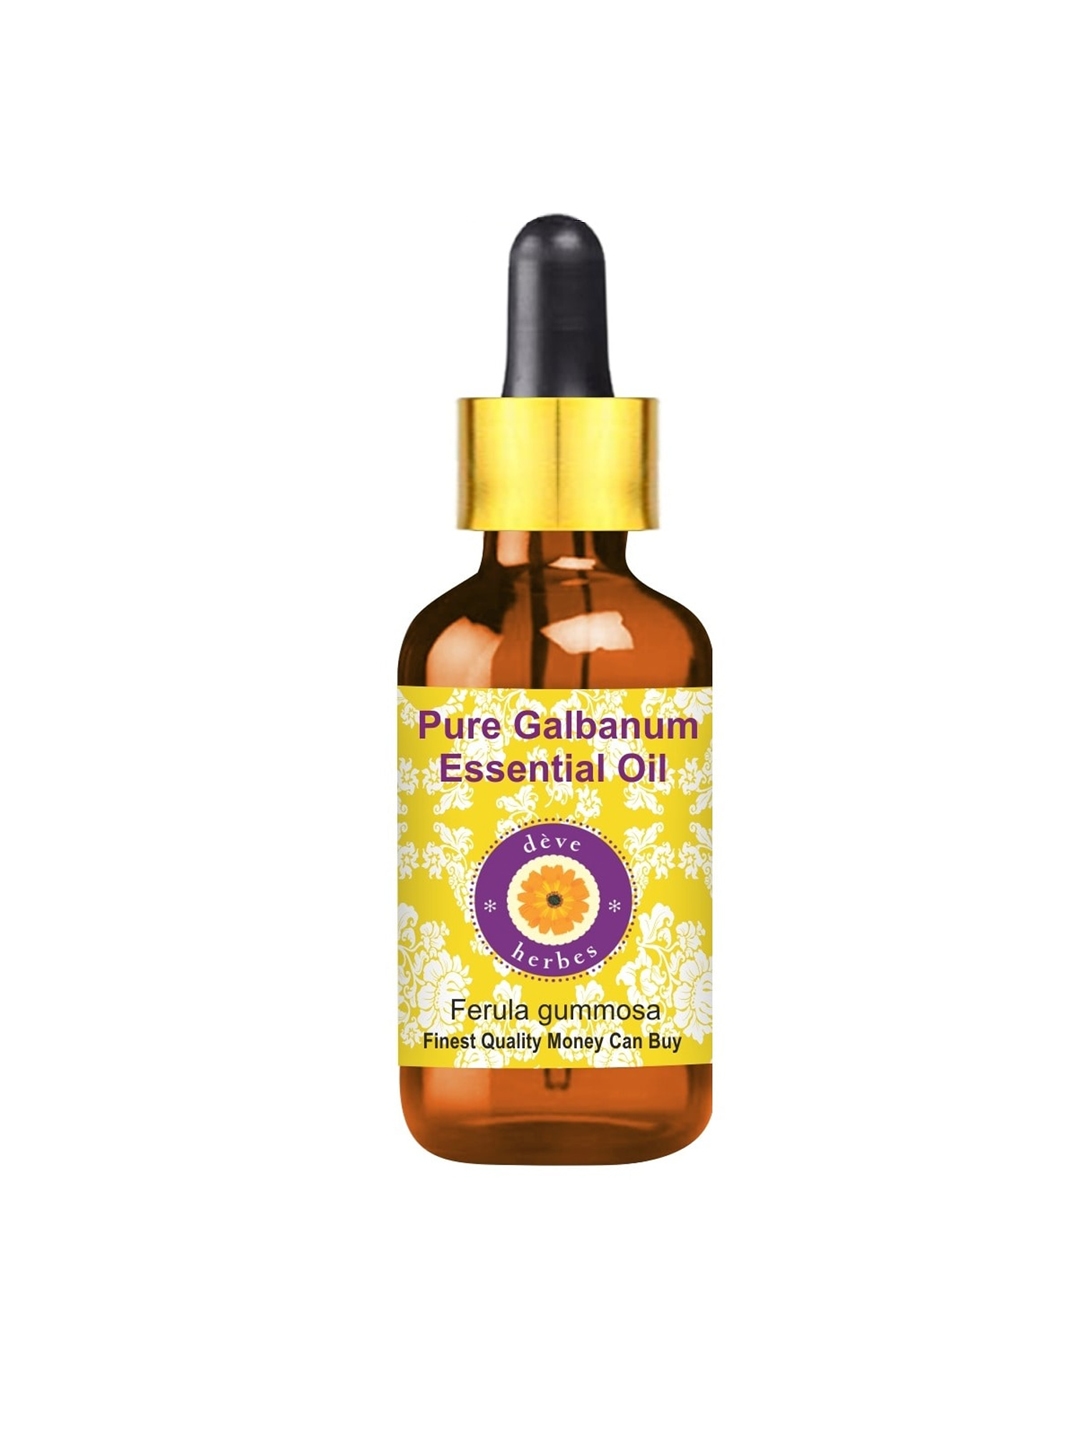 Deve Herbes Pure Galbanum Essential Oil 100% Natural Therapeutic Grade 50ml